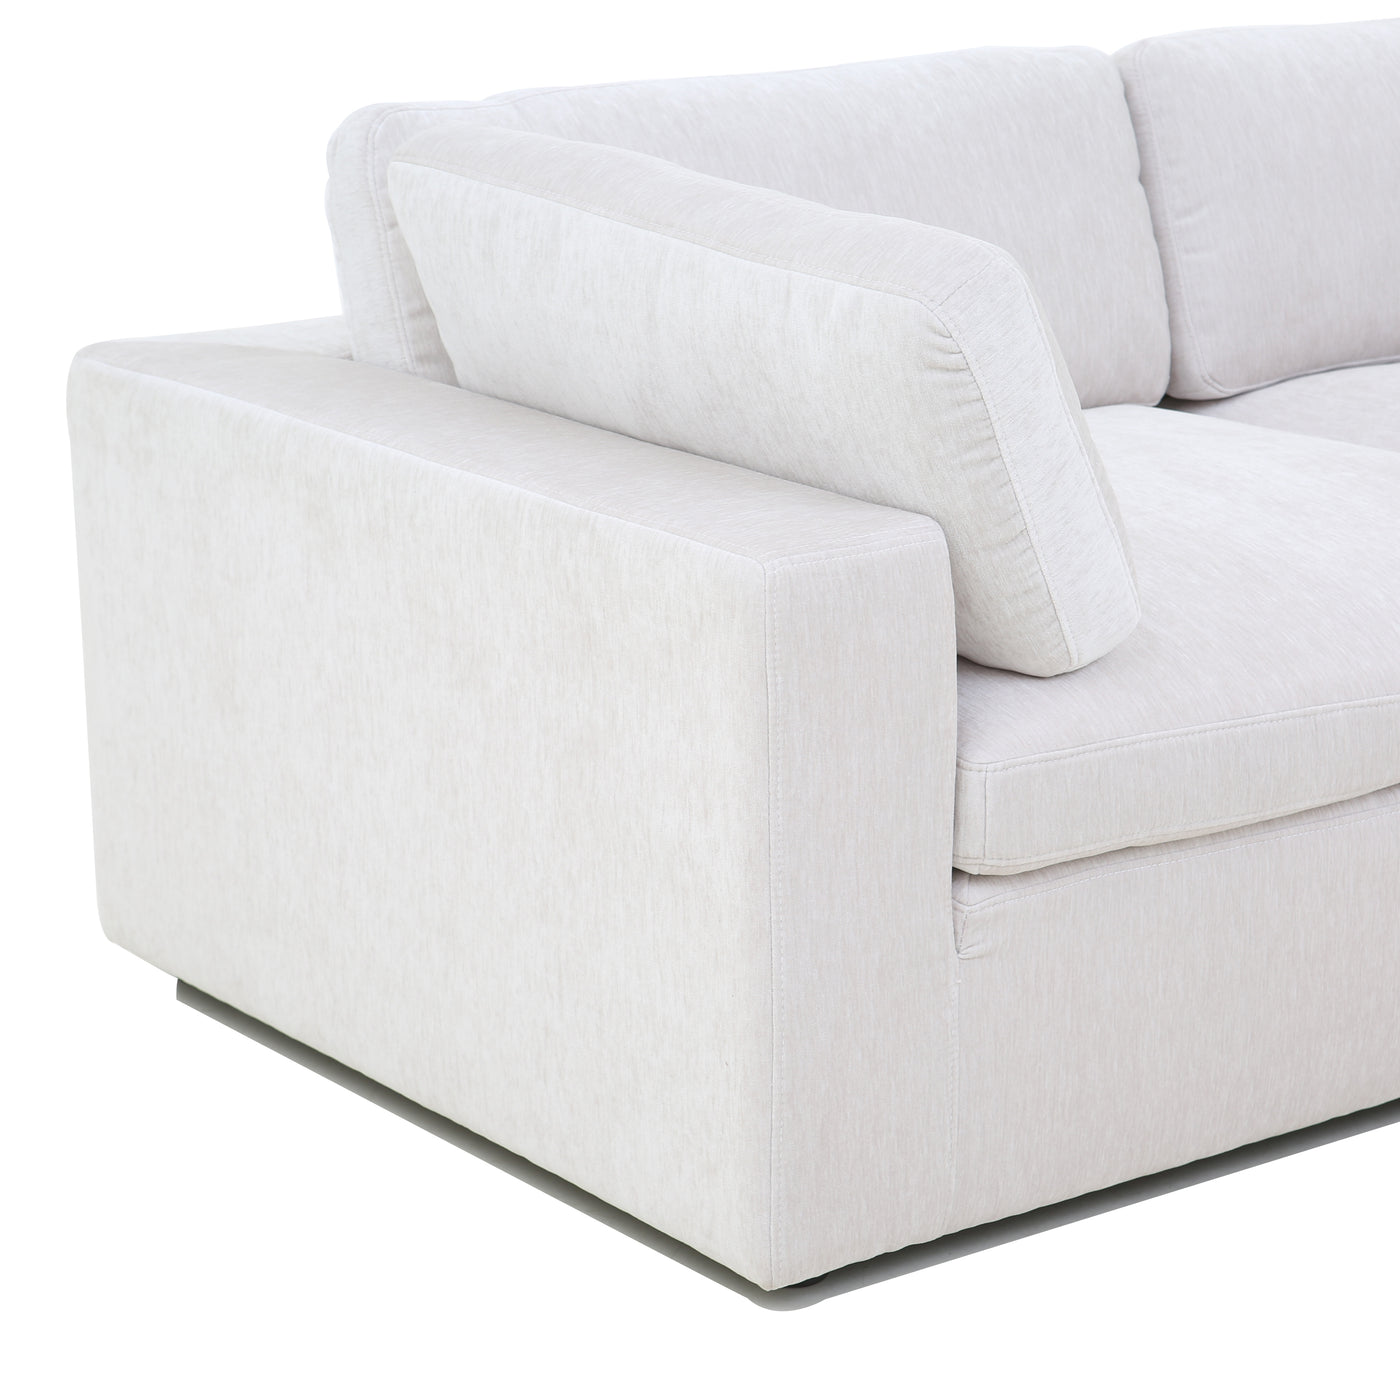 Zephyr 4-Seat Sofa